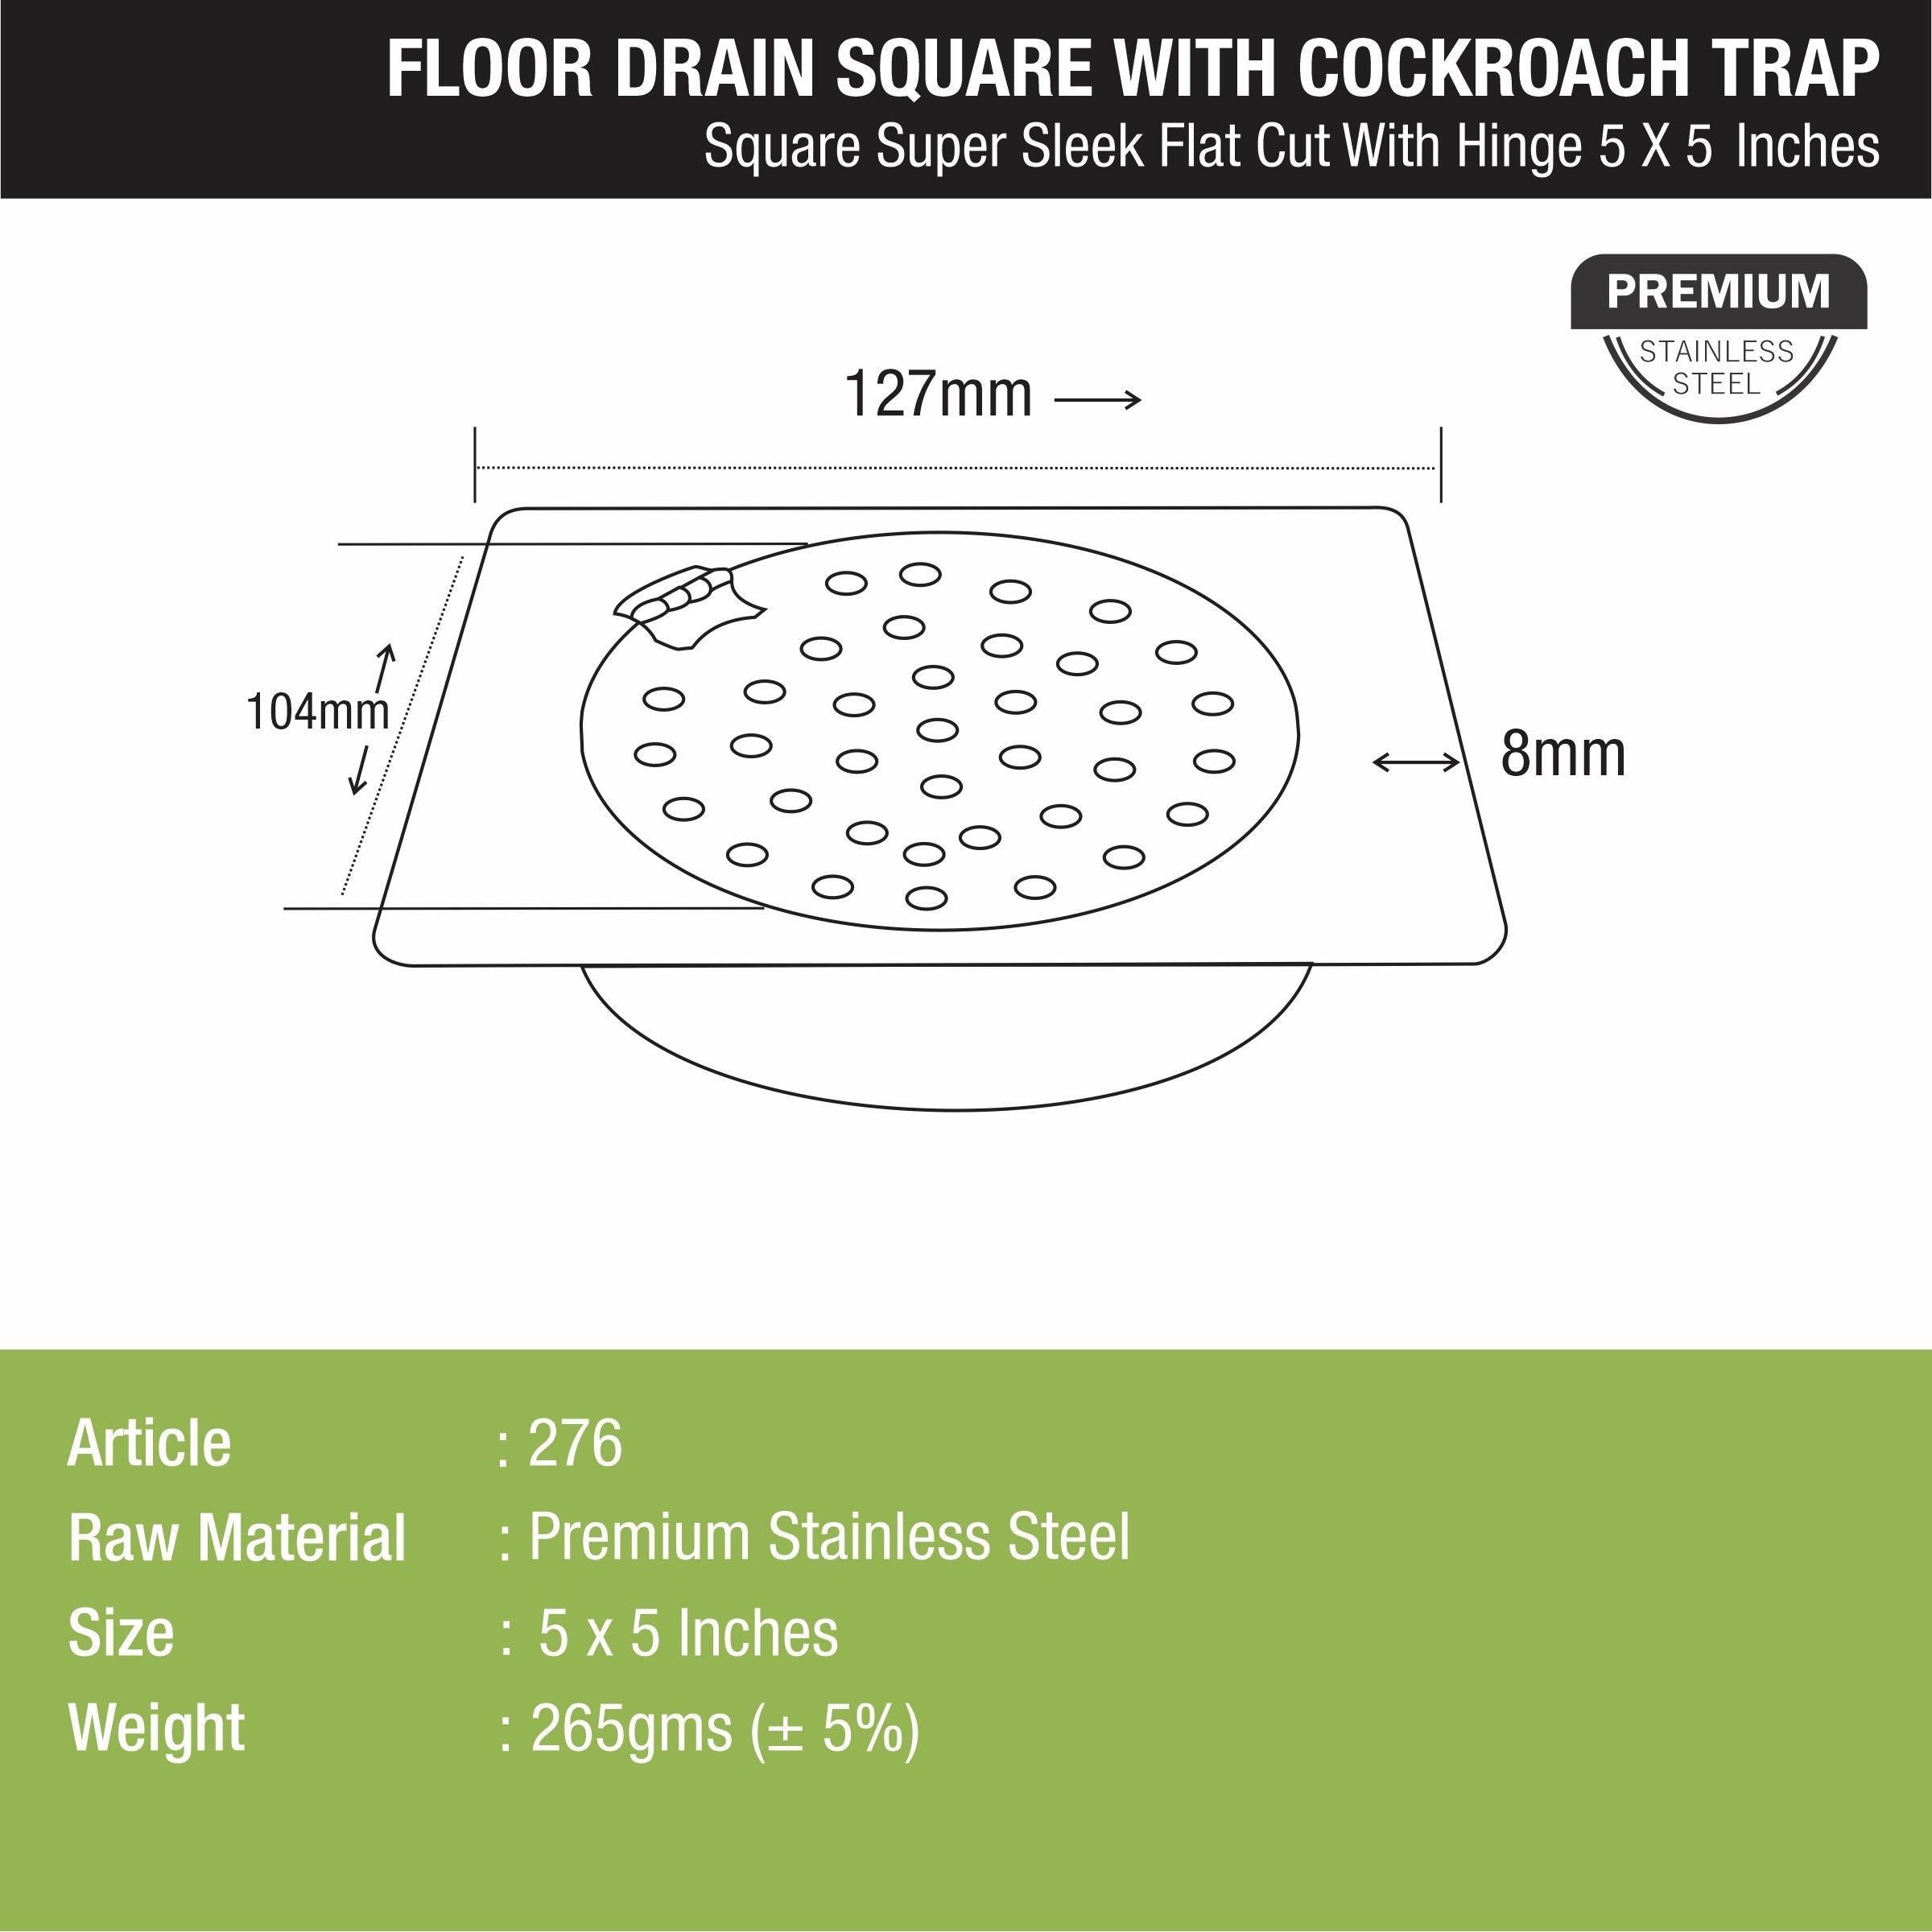 Super Sleek Square Flat Cut Floor Drain (5 x 5 Inches) with Hinge and Cockroach Trap - LIPKA - Lipka Home